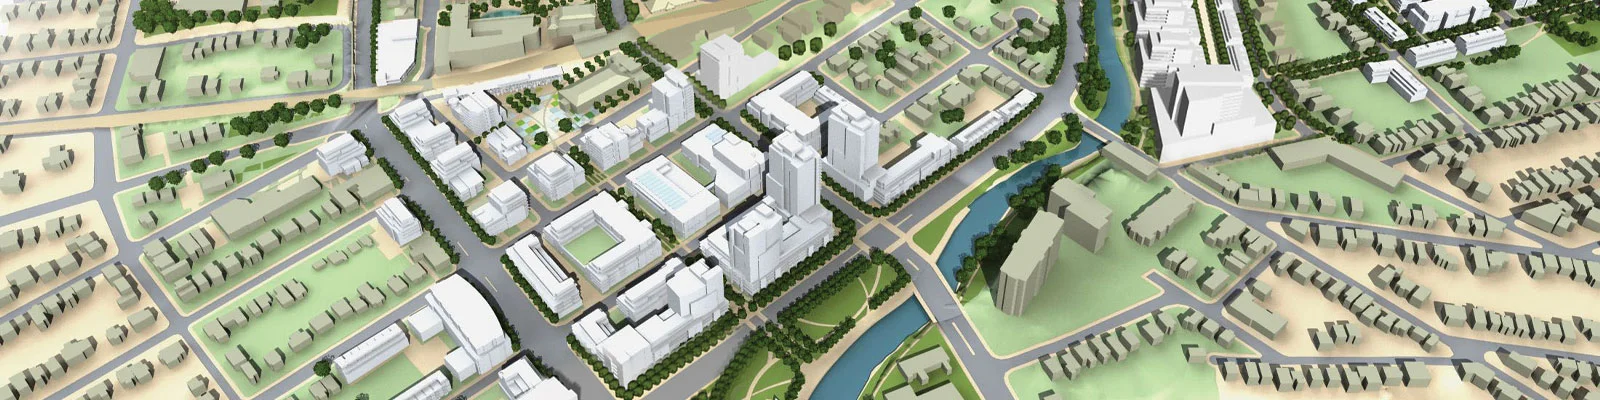 https://www.urbanstrategies.com/wp-content/uploads/2013/10/City-of-Guelph_Project-Fullbleed.jpg.webp